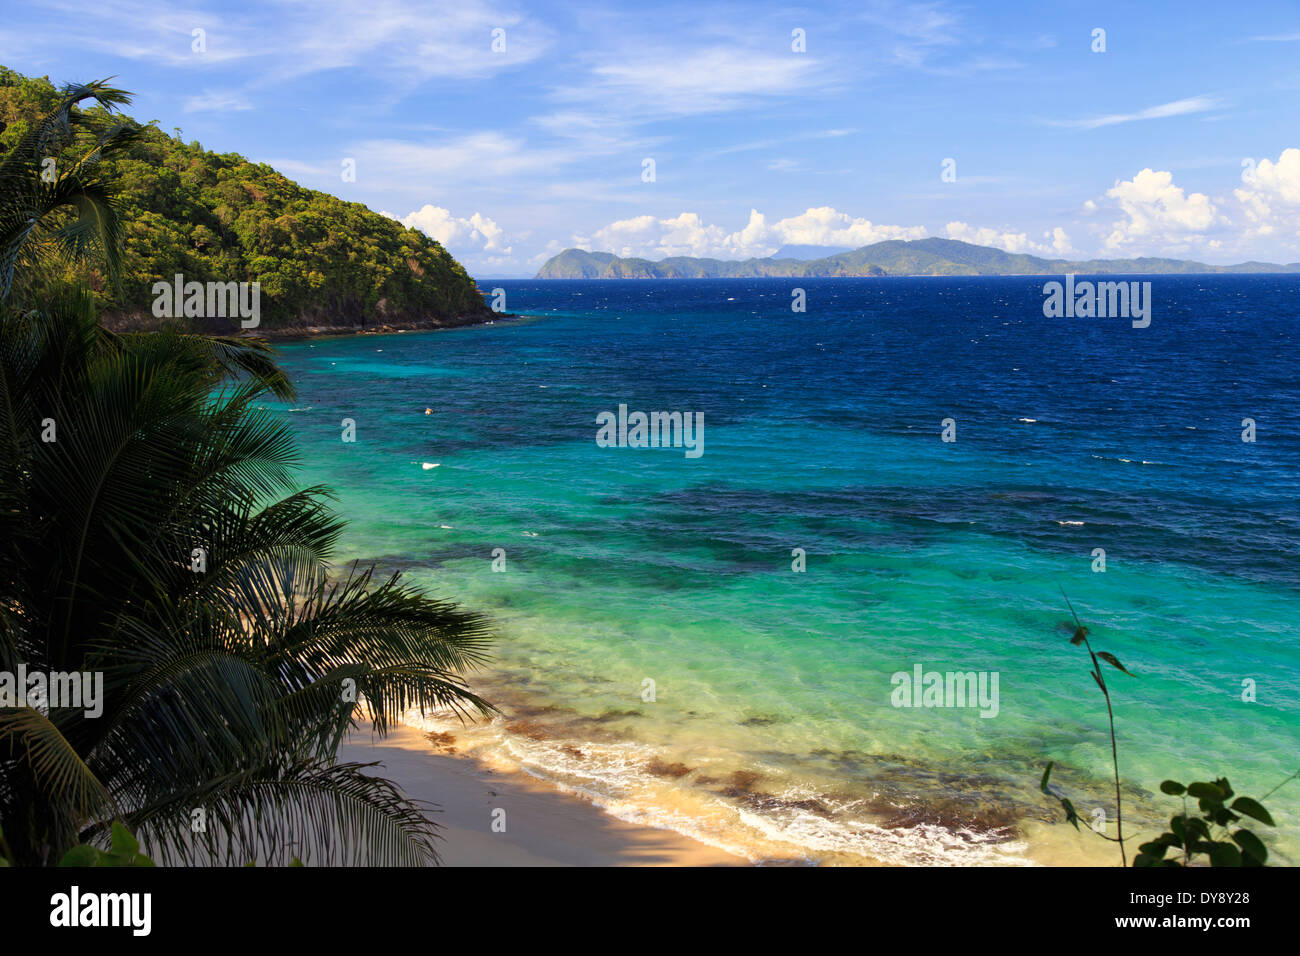 Philippines, Palawan, Port Barton, Cacnipa Island Stock Photo - Alamy